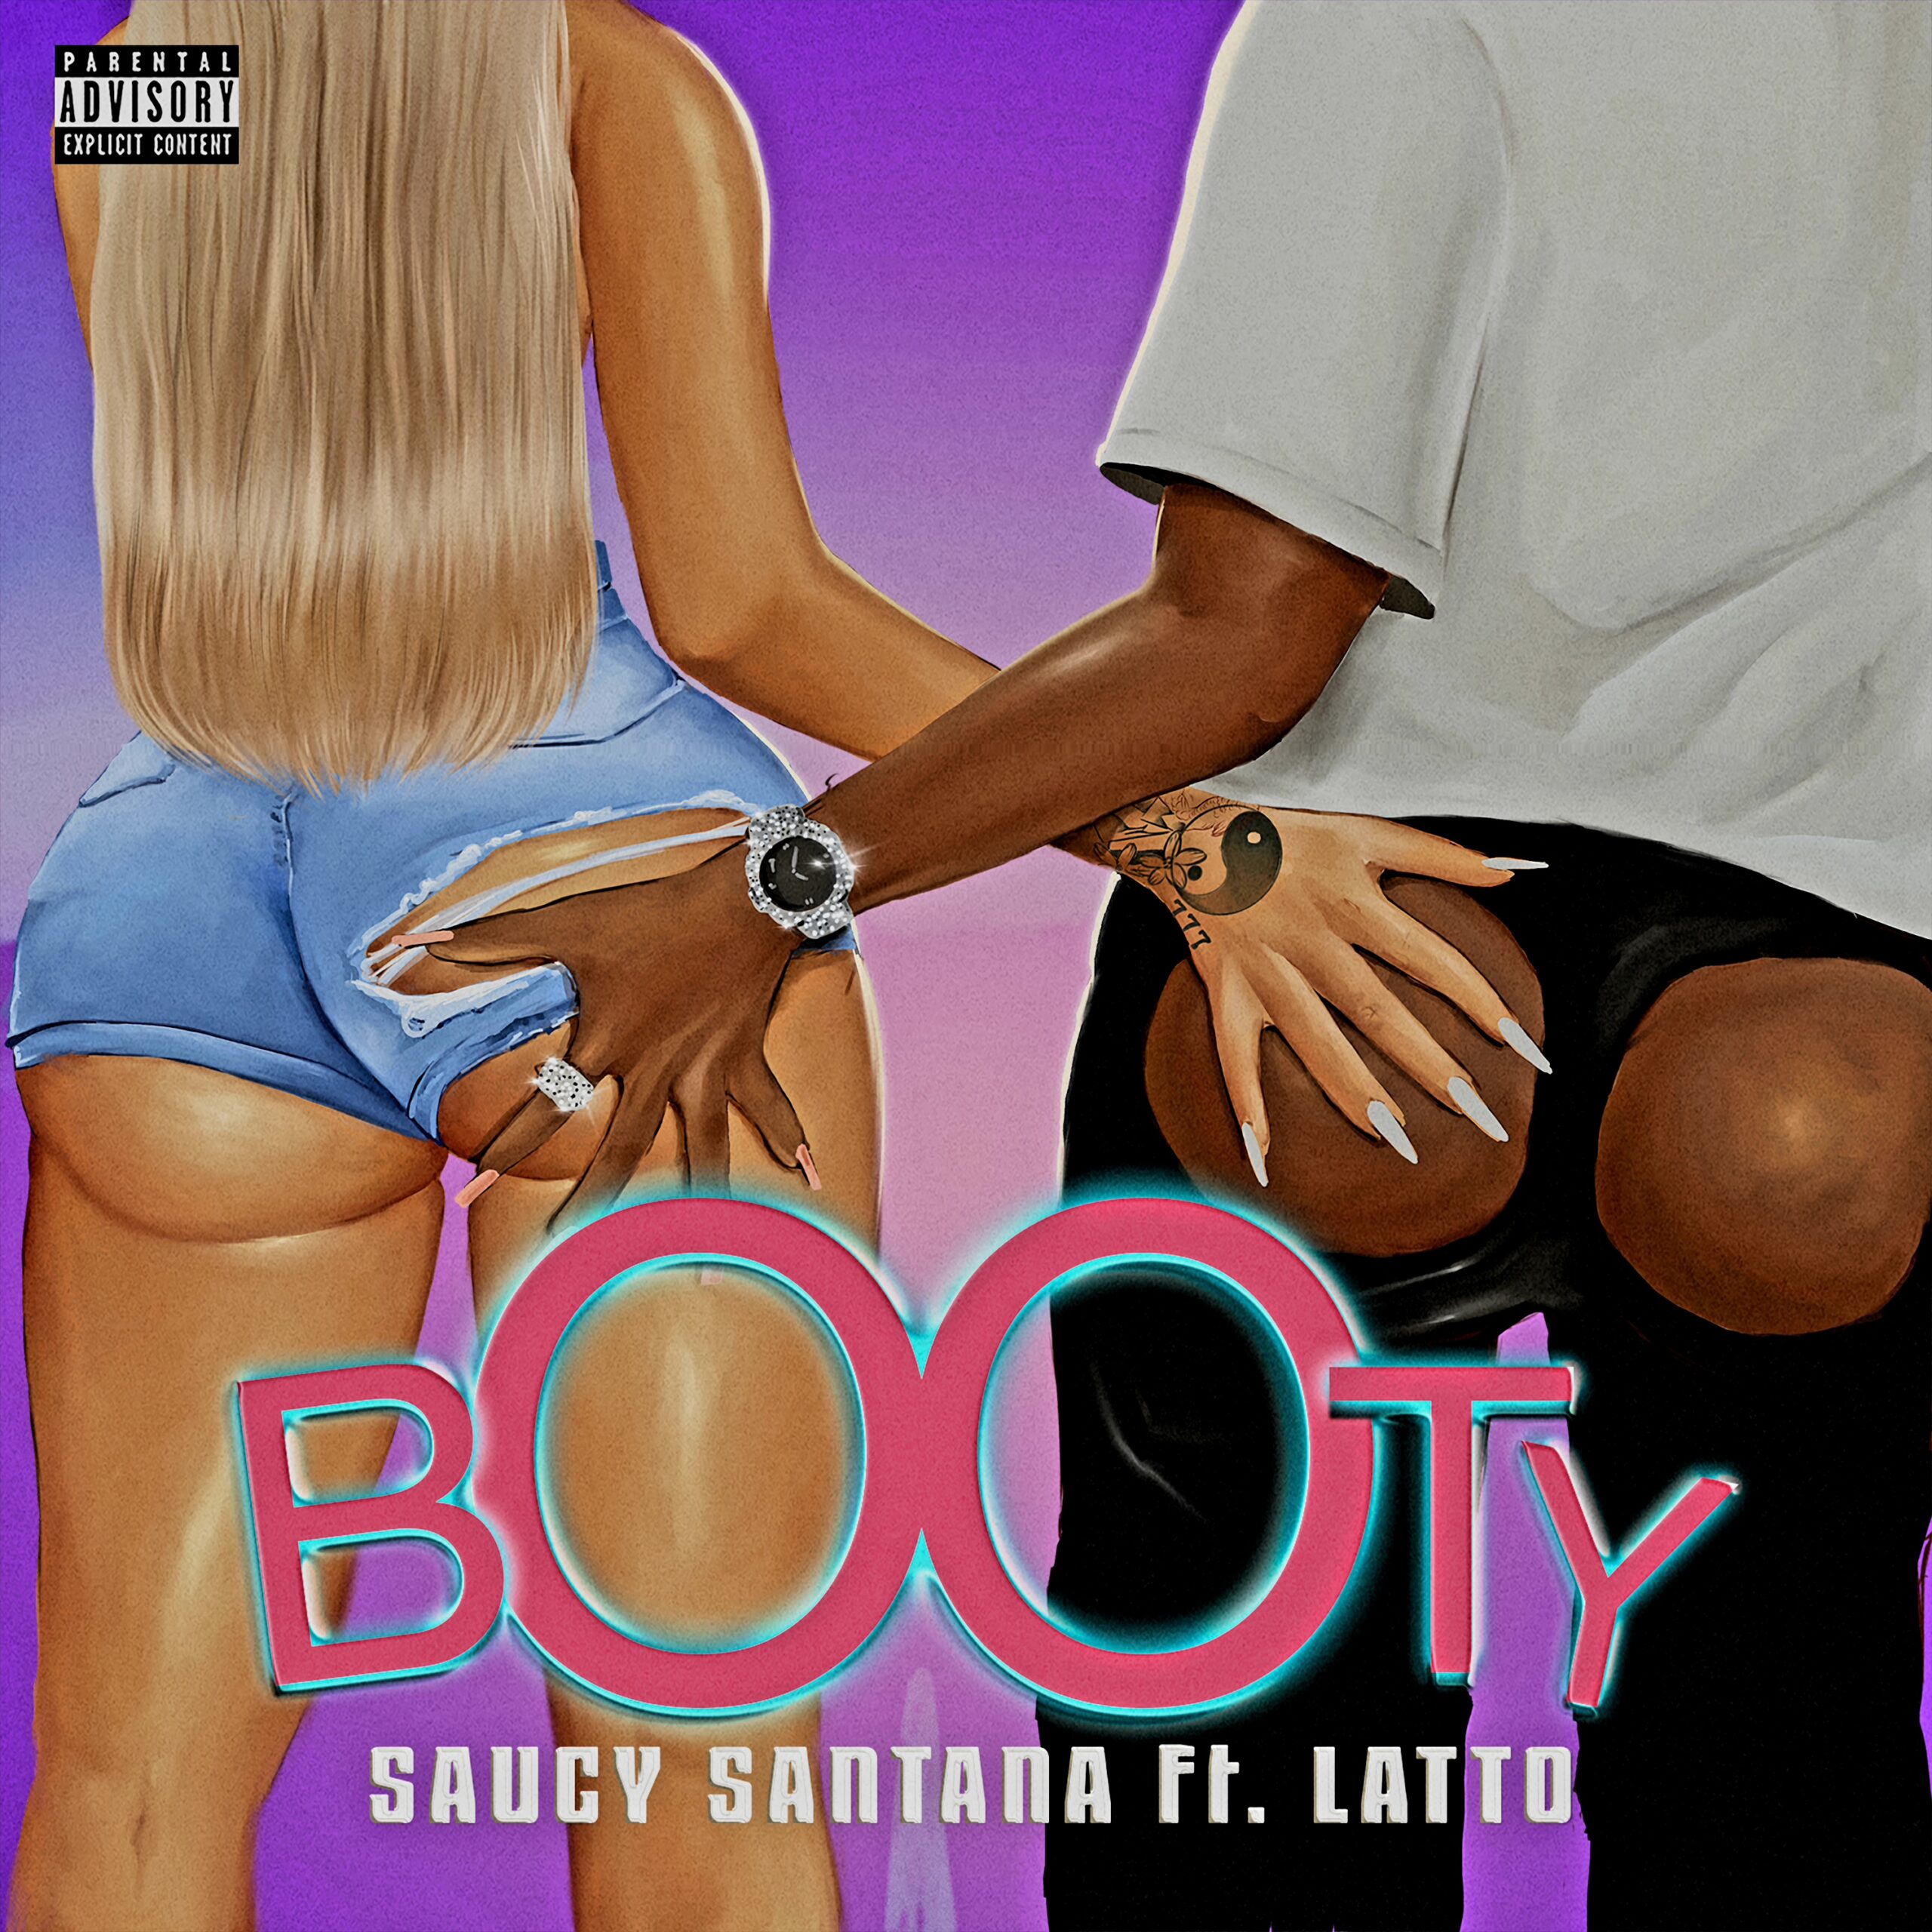 Saucy Santana and Latto Booty song release via 360 Magazine